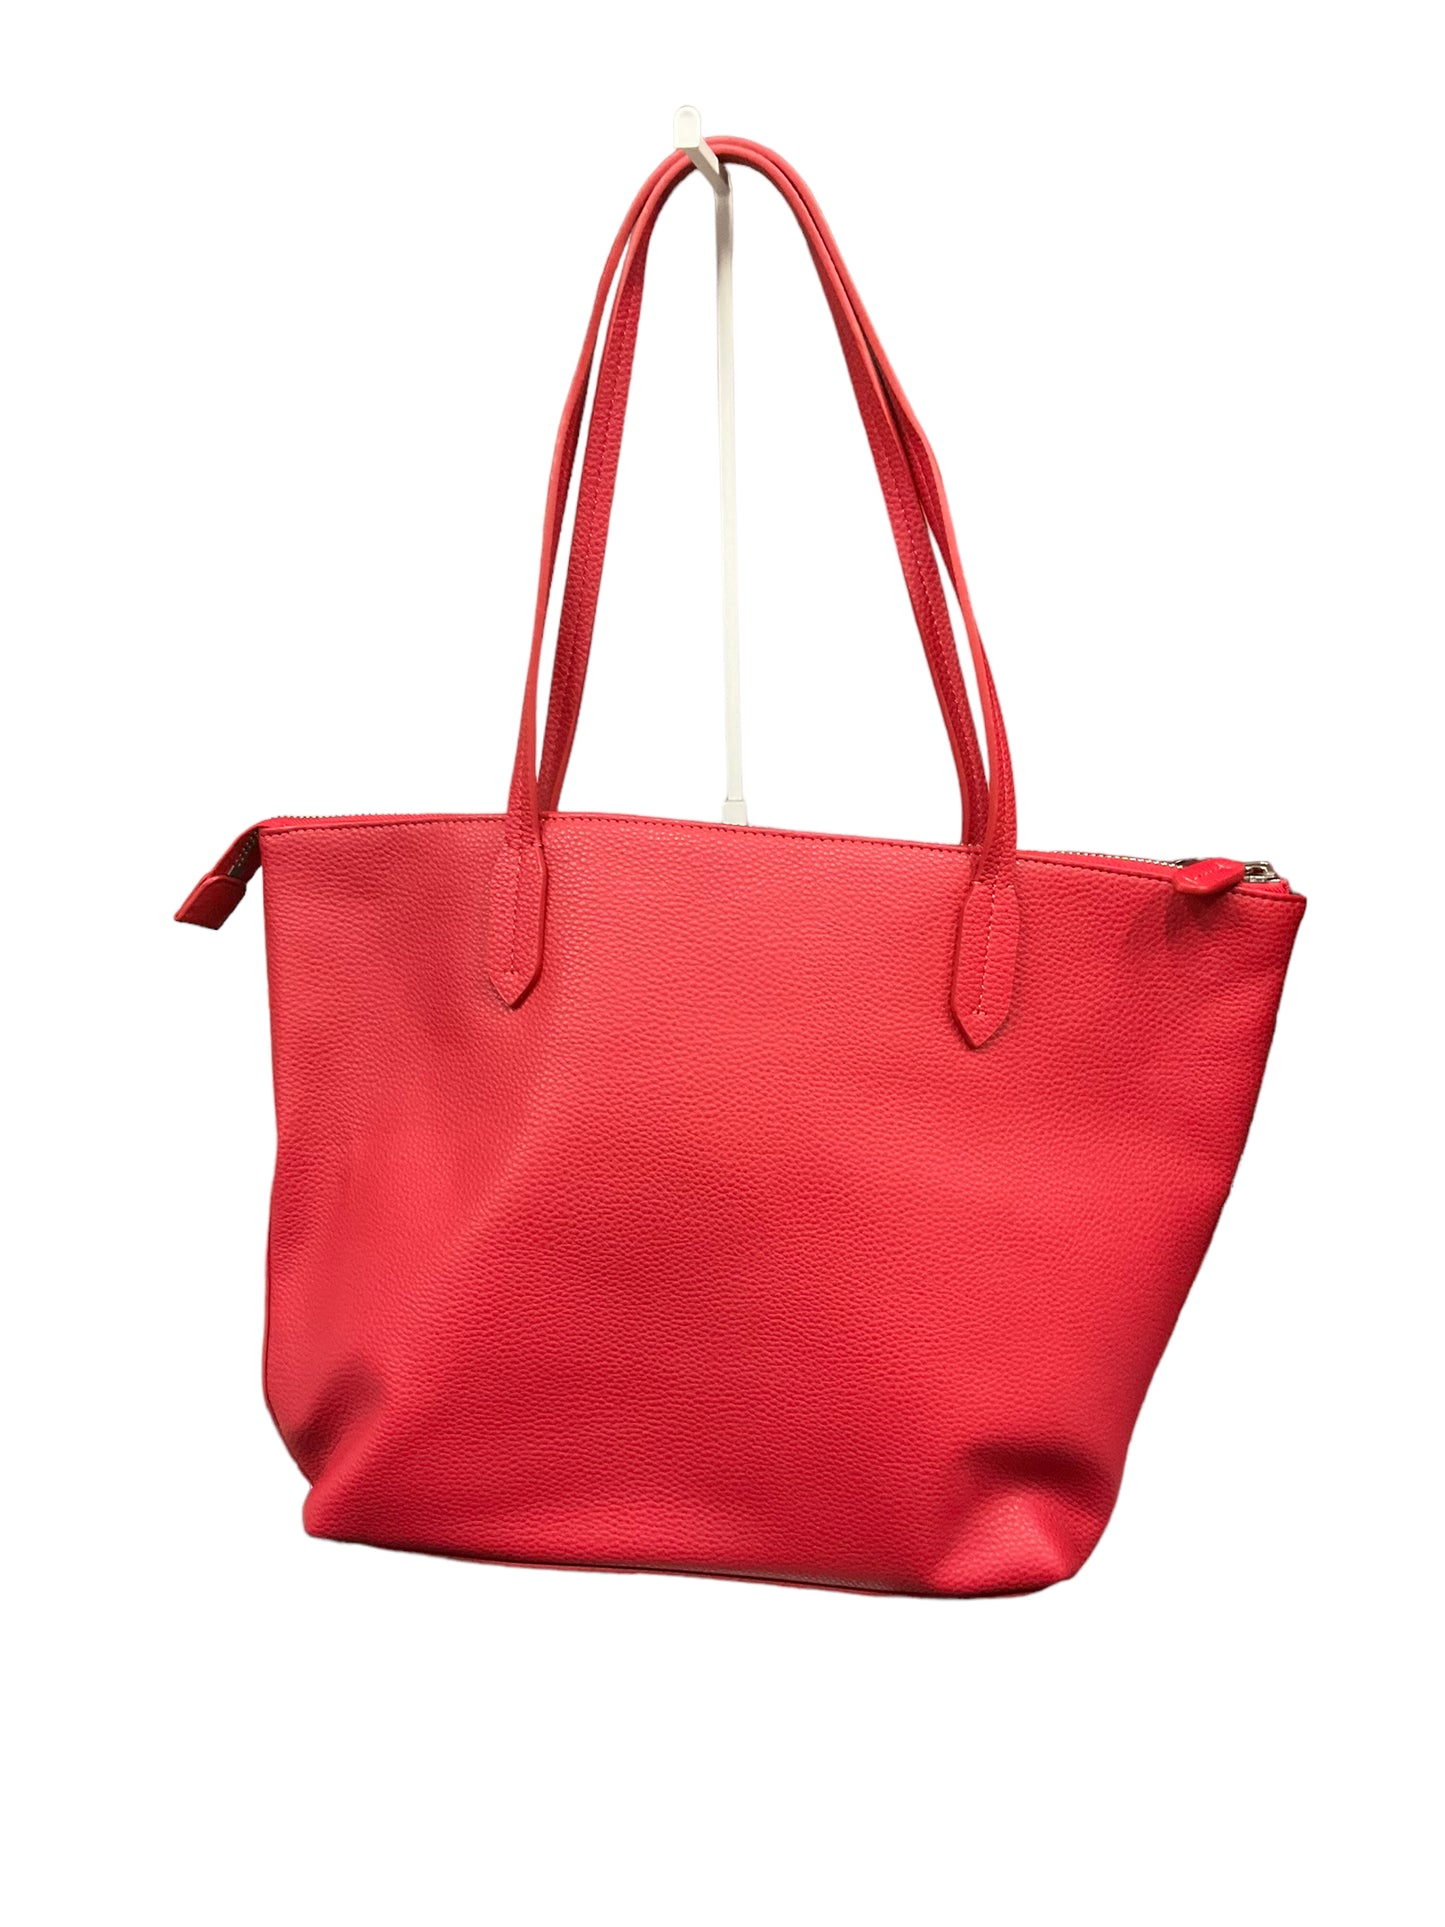 Handbag By Armani Exchange  Size: Large